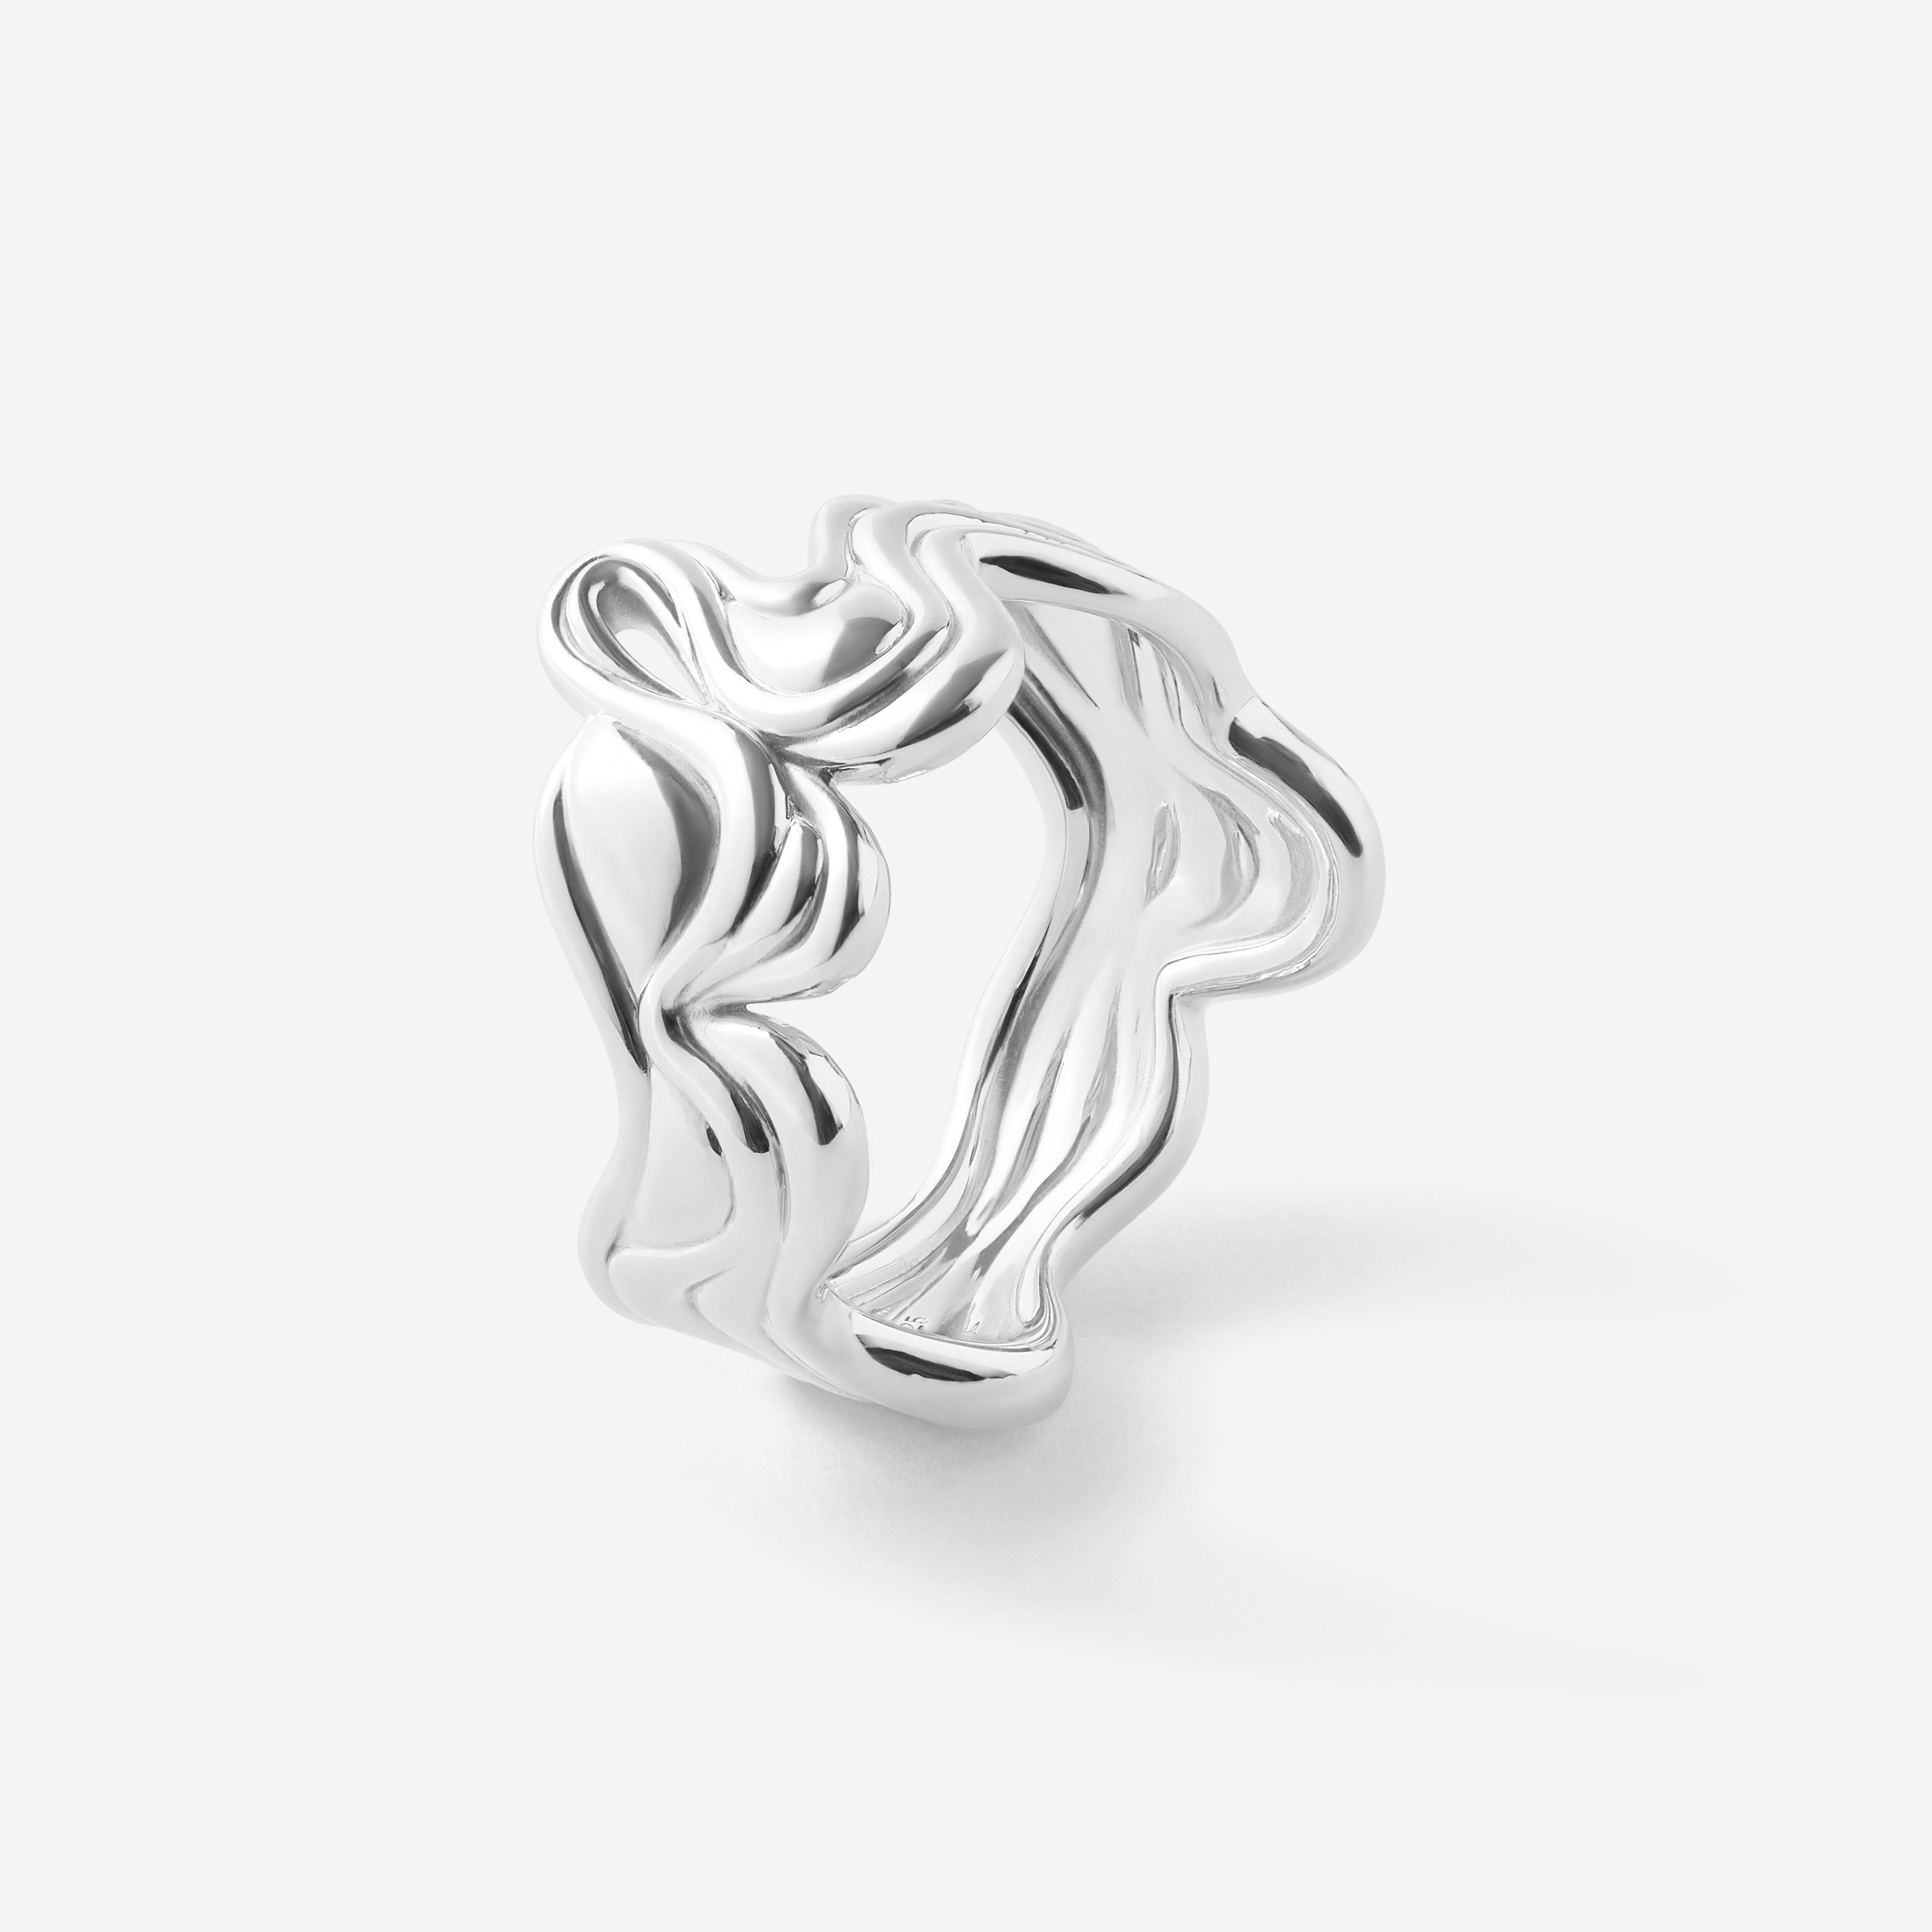 Interwoven Souls Wave Diamond Silver Ring Set